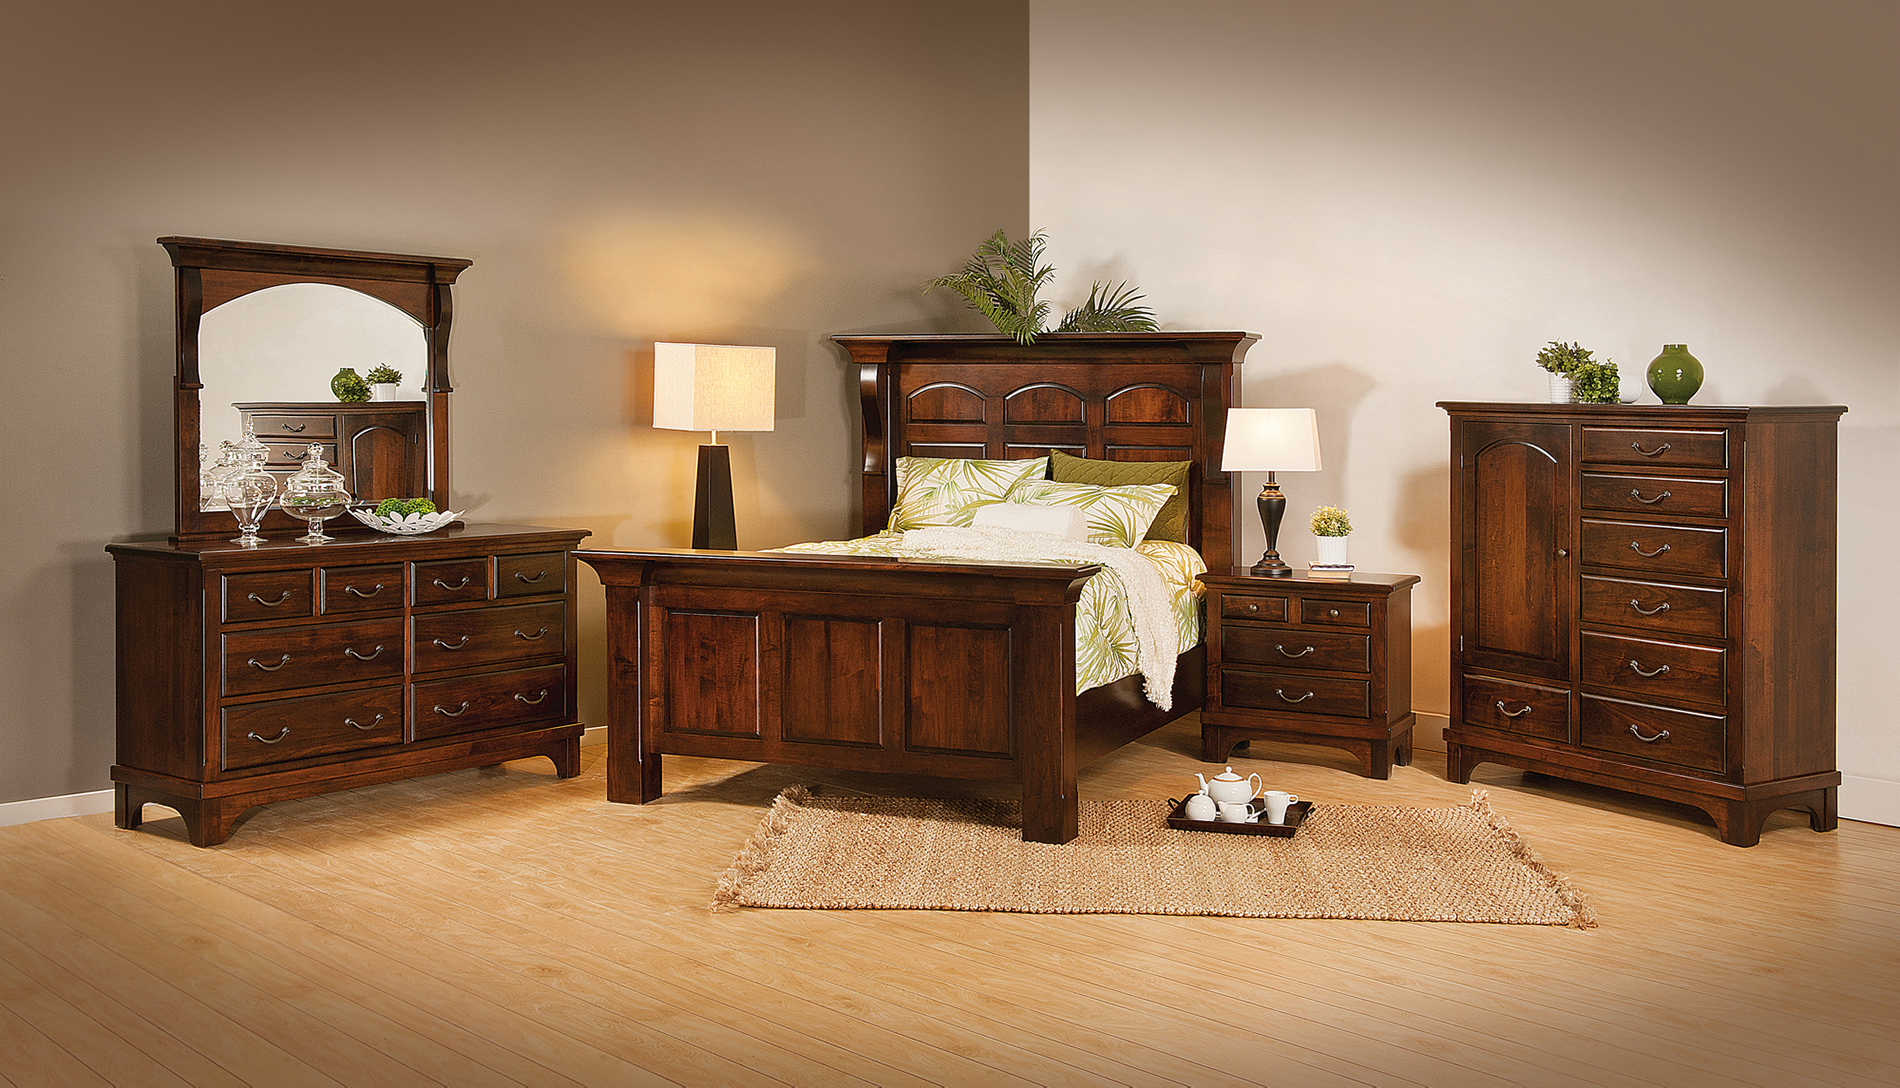 hamilton bedroom furniture collection